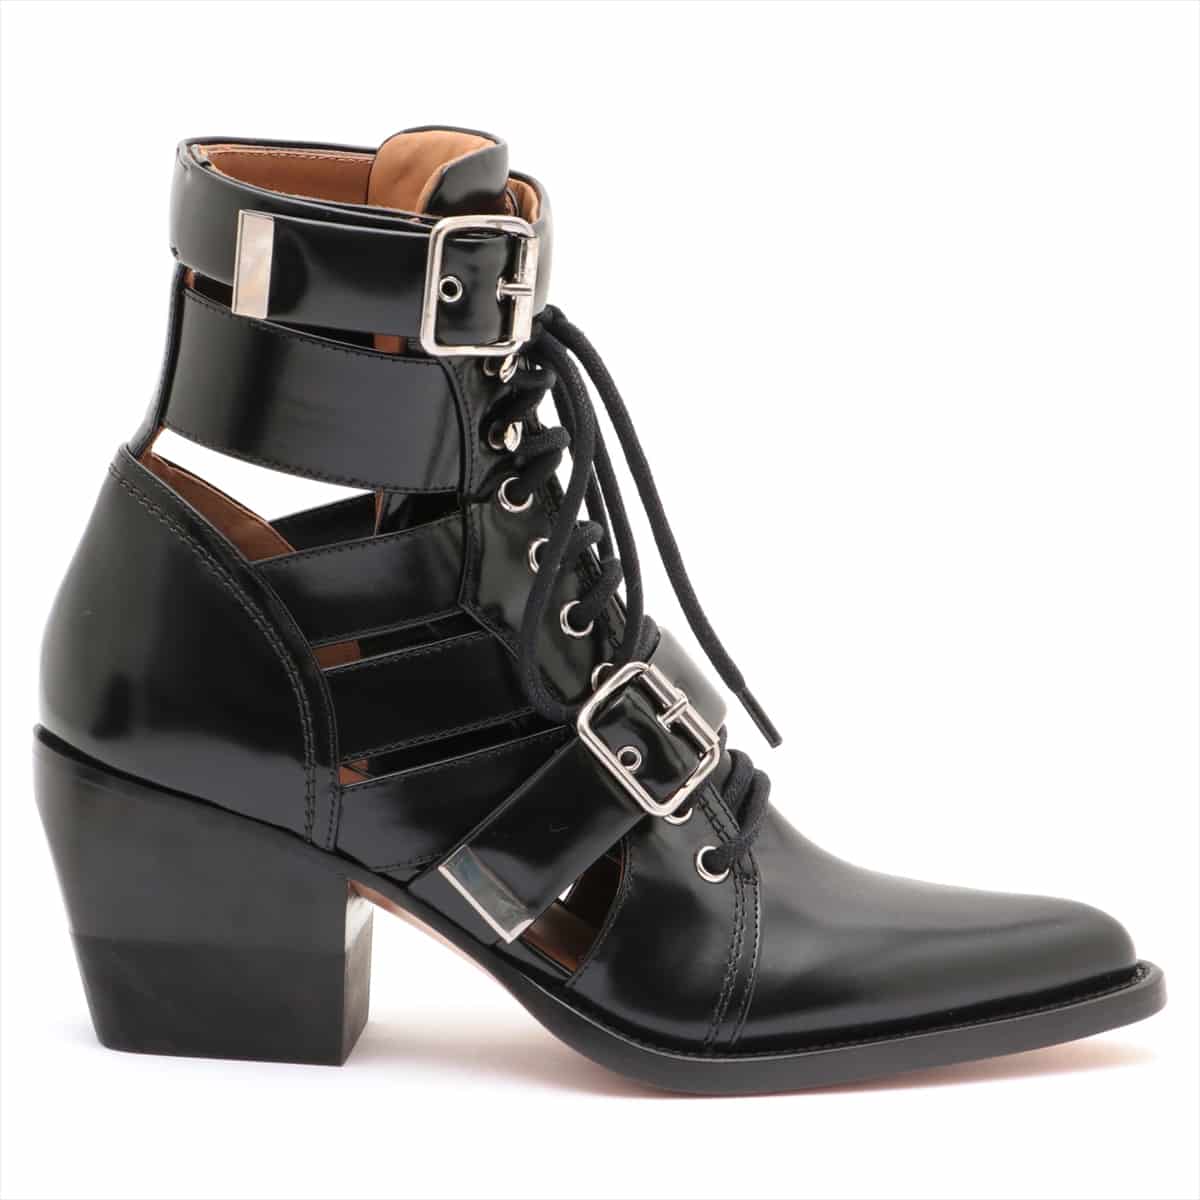 Chloe Leather Boots 40 Ladies' Black